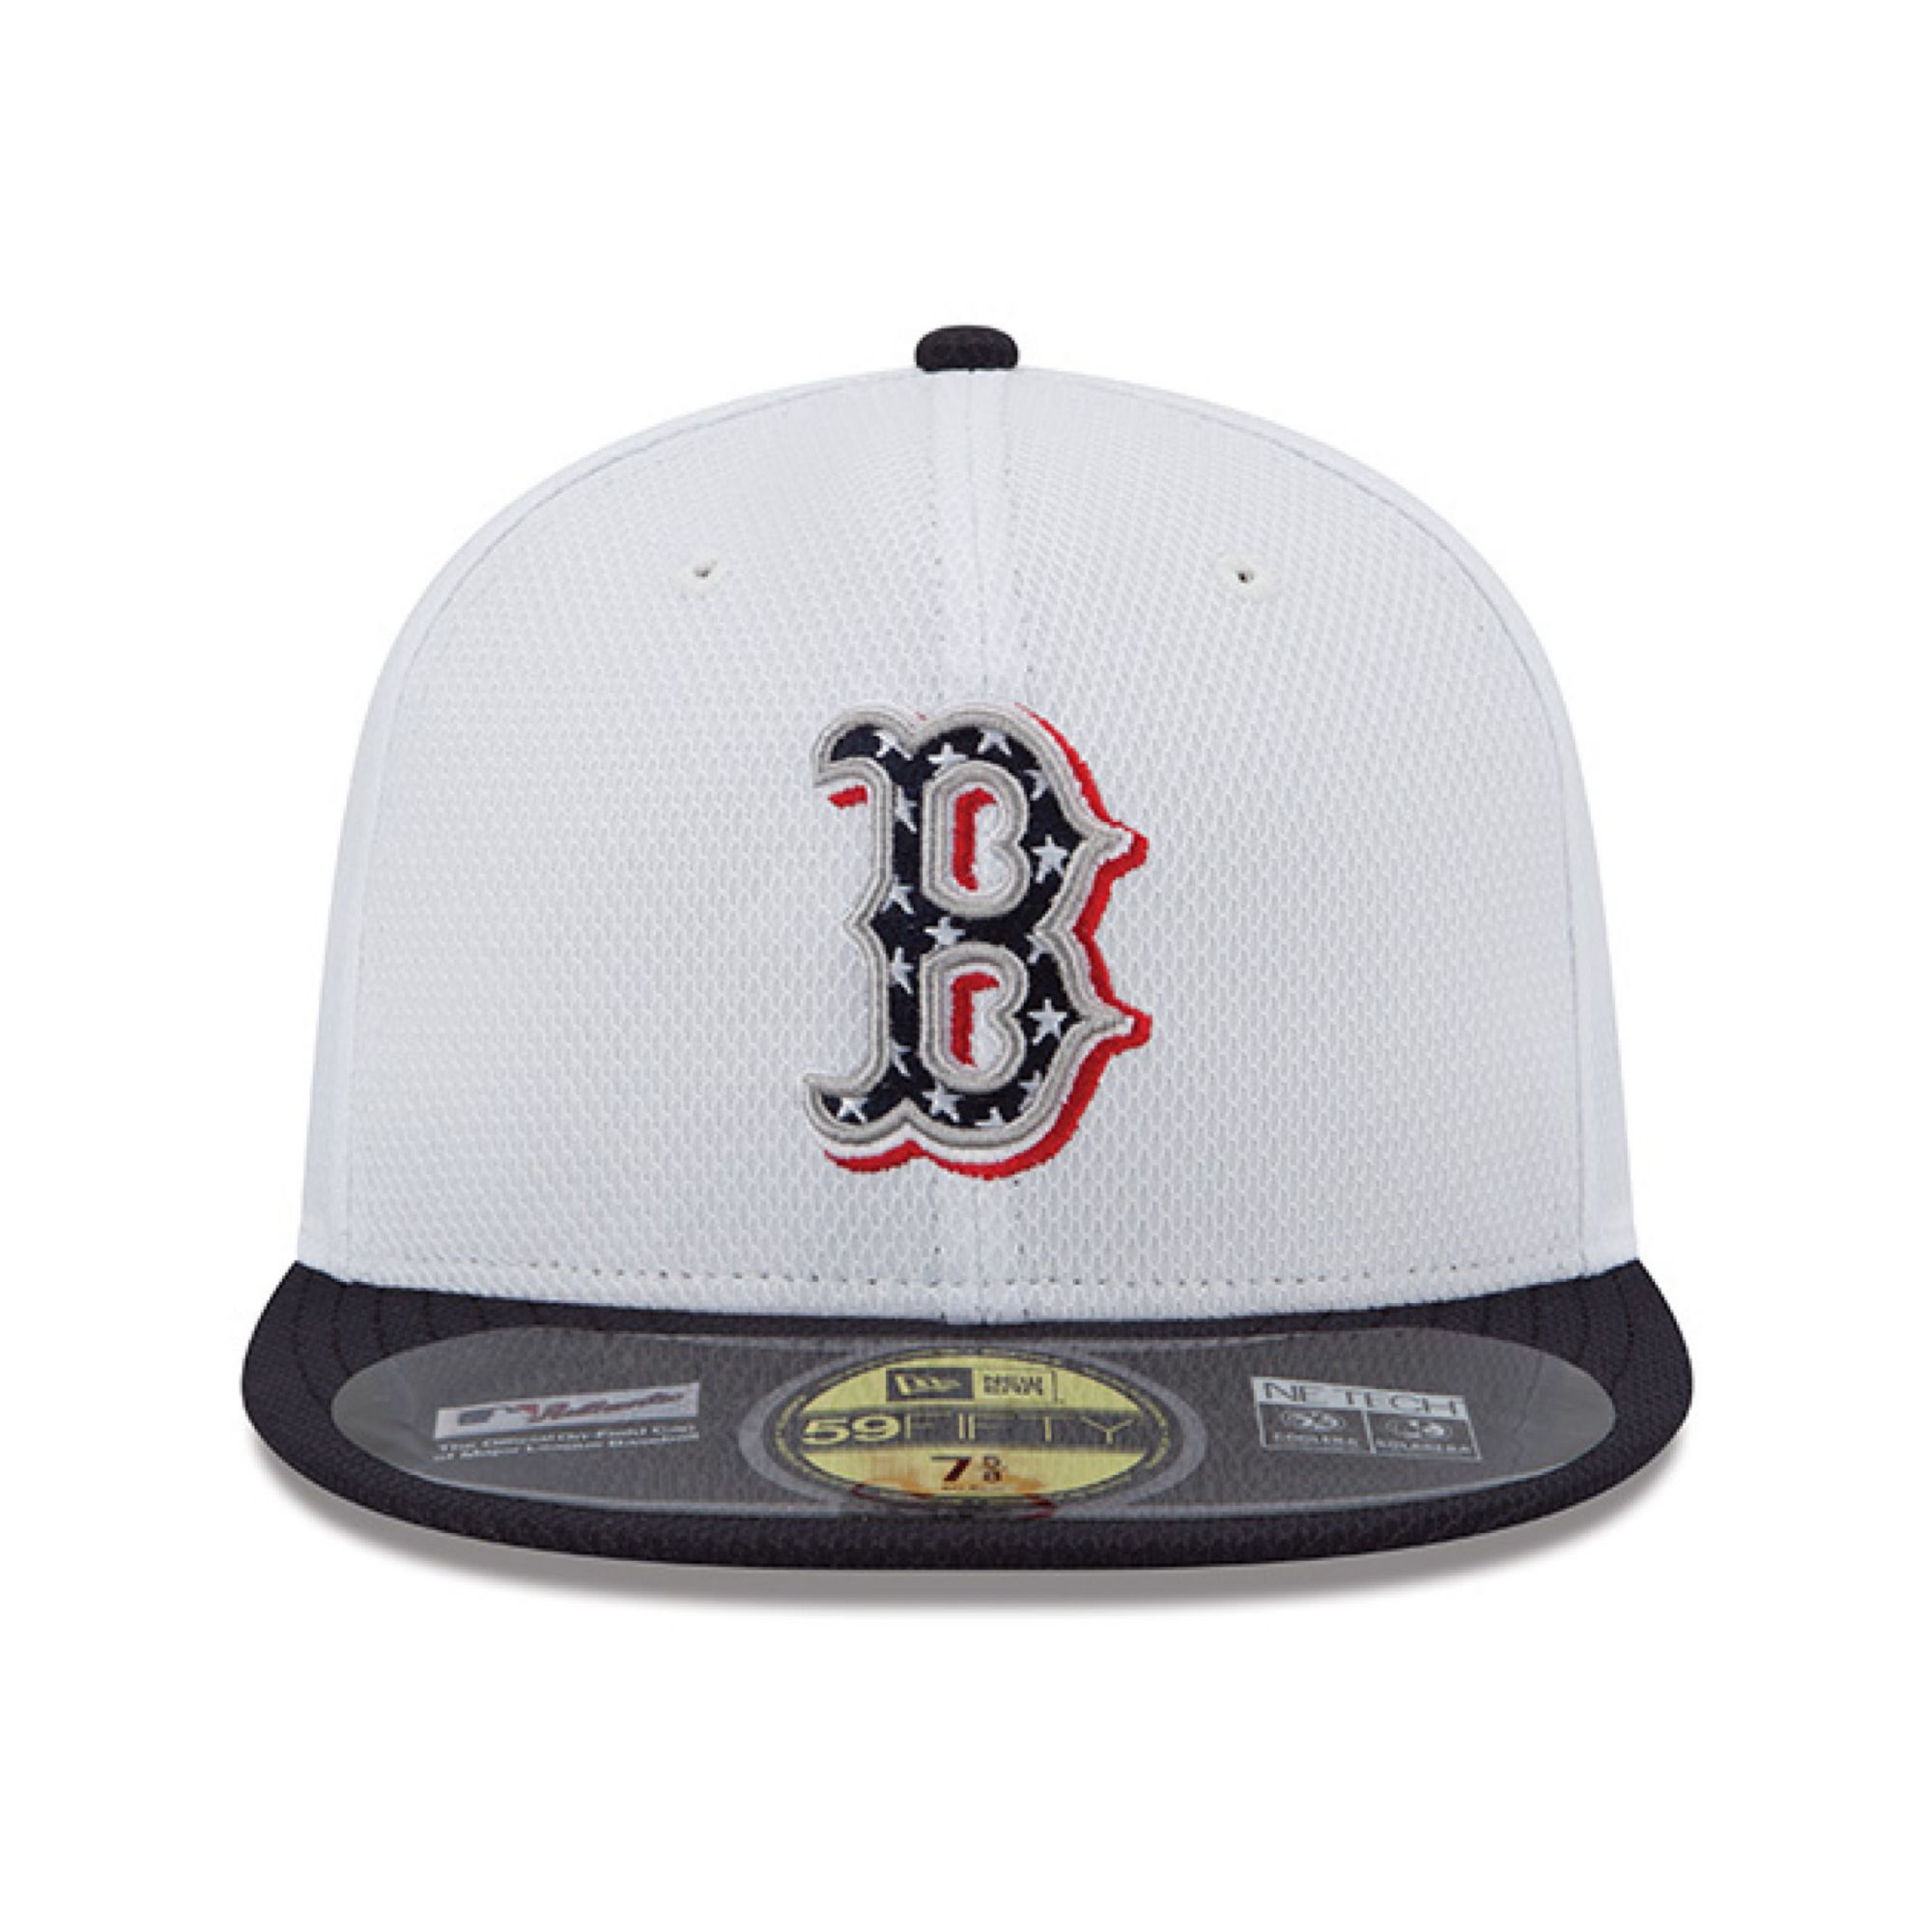 KTZ Boston Red Sox Mlb White And Black 59fifty Cap for Men